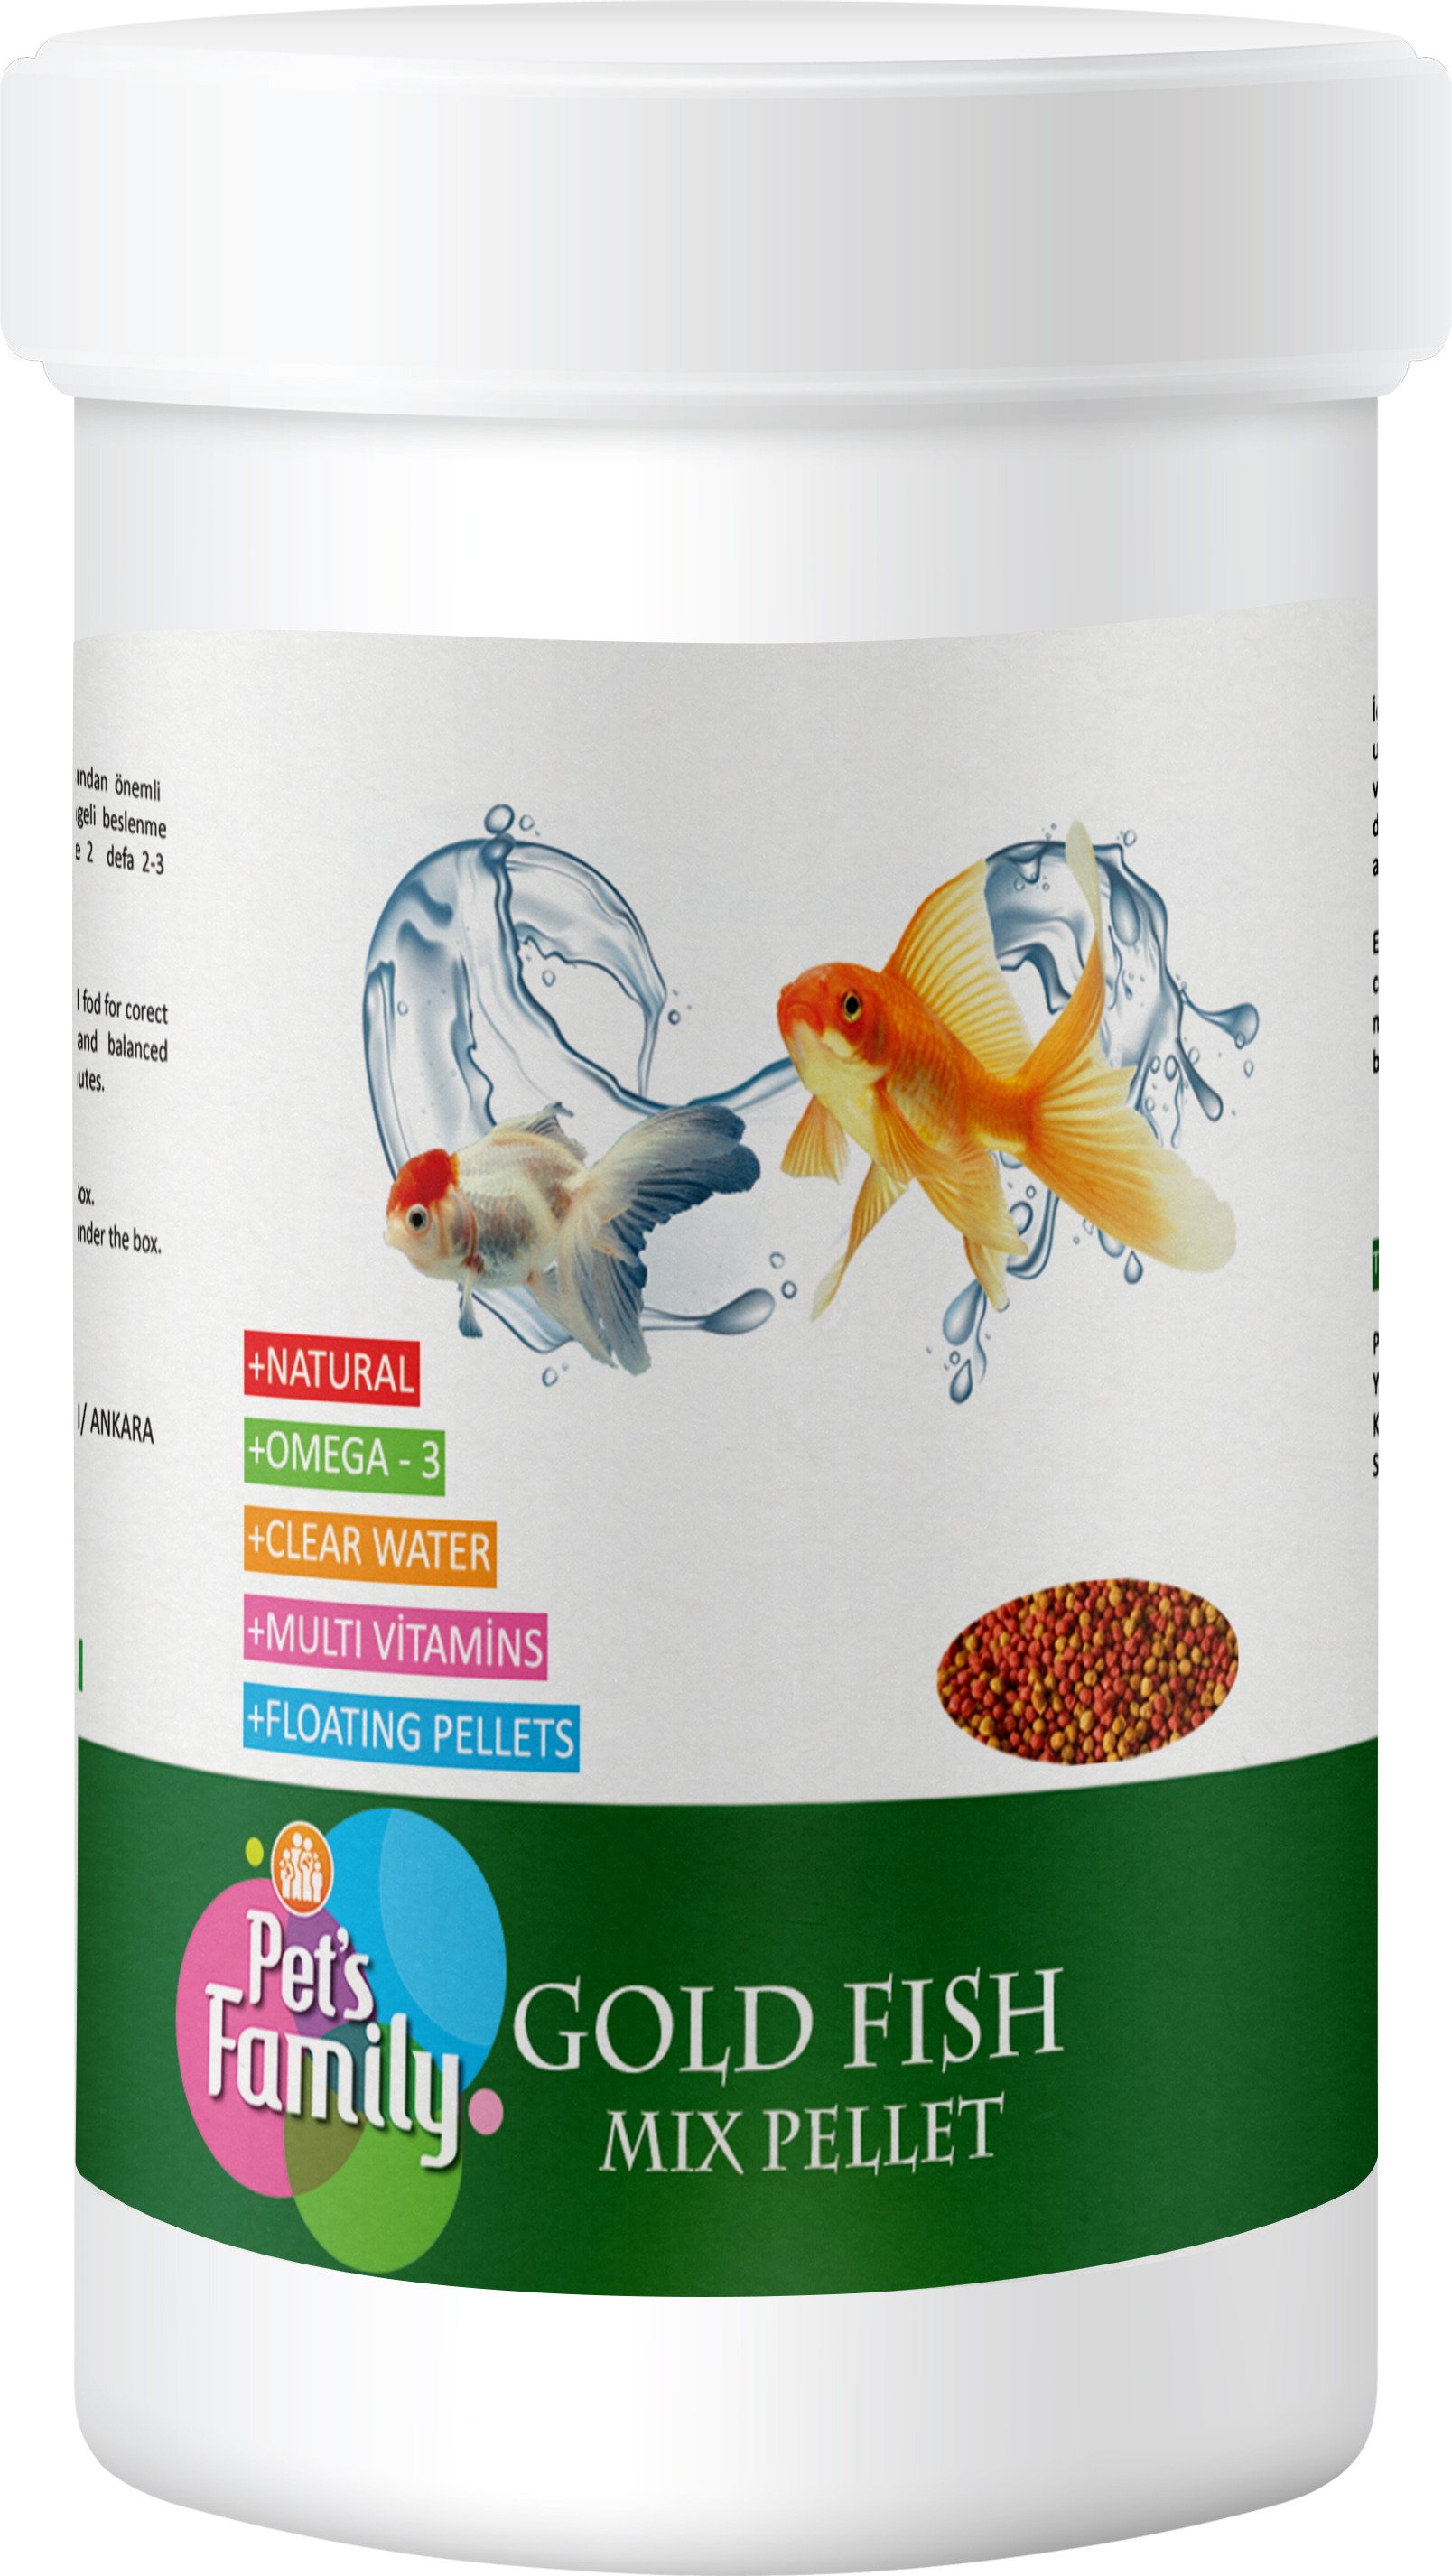 PETS FAMİLY GOLD FISH MIX PELLET 100ML/50g